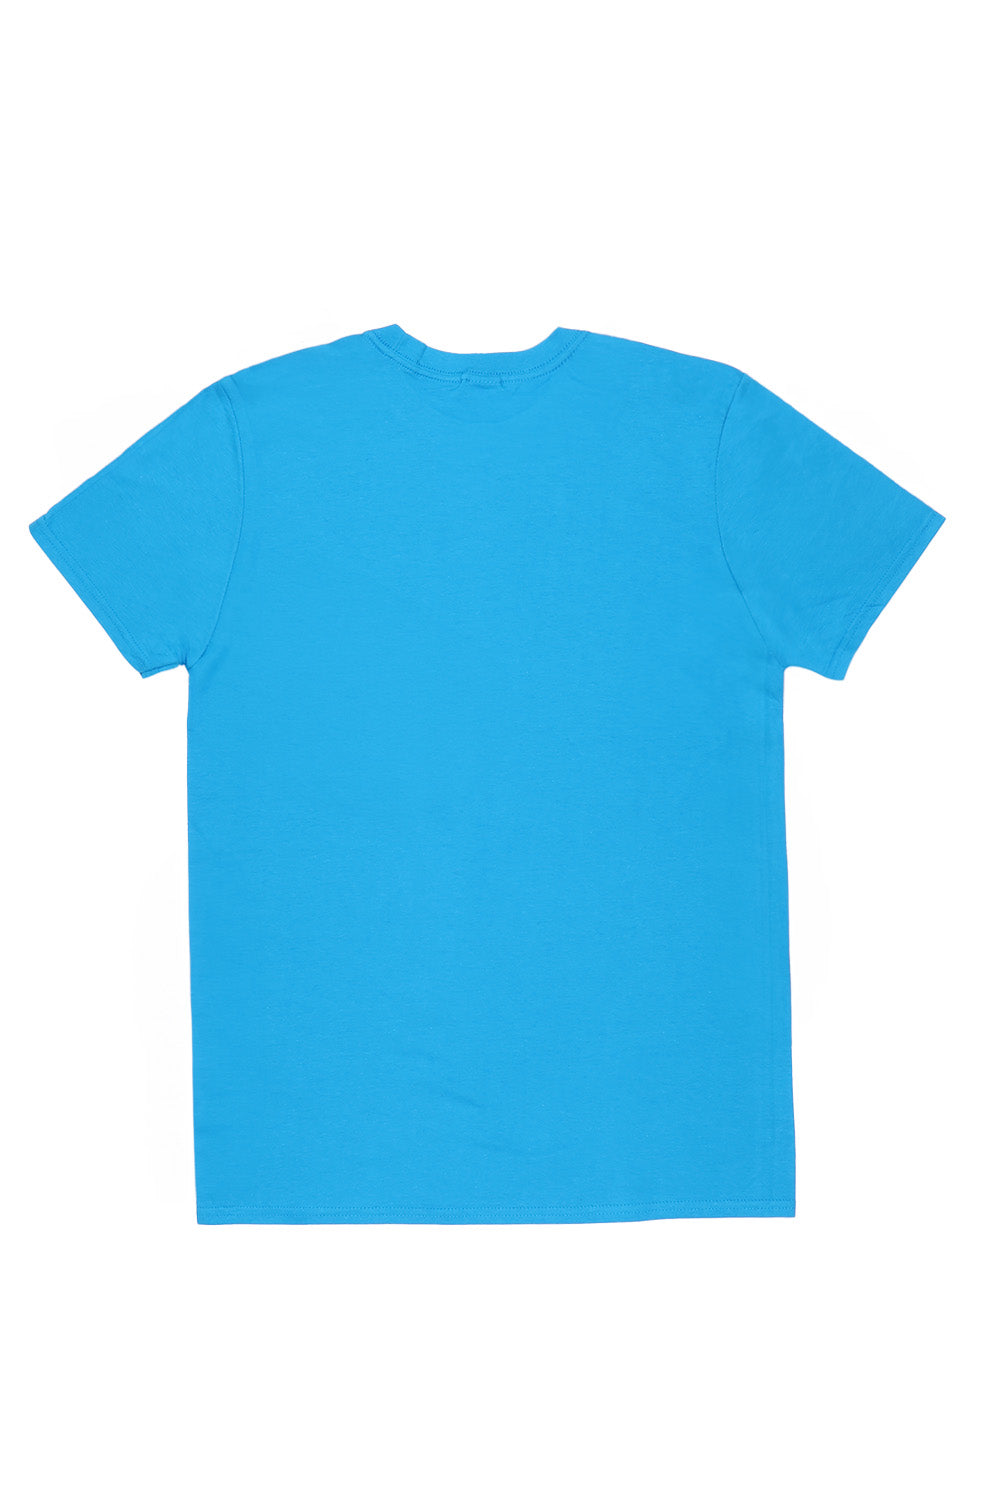 Santa Monica T-Shirt in Sapphire Blue (Custom Packs)